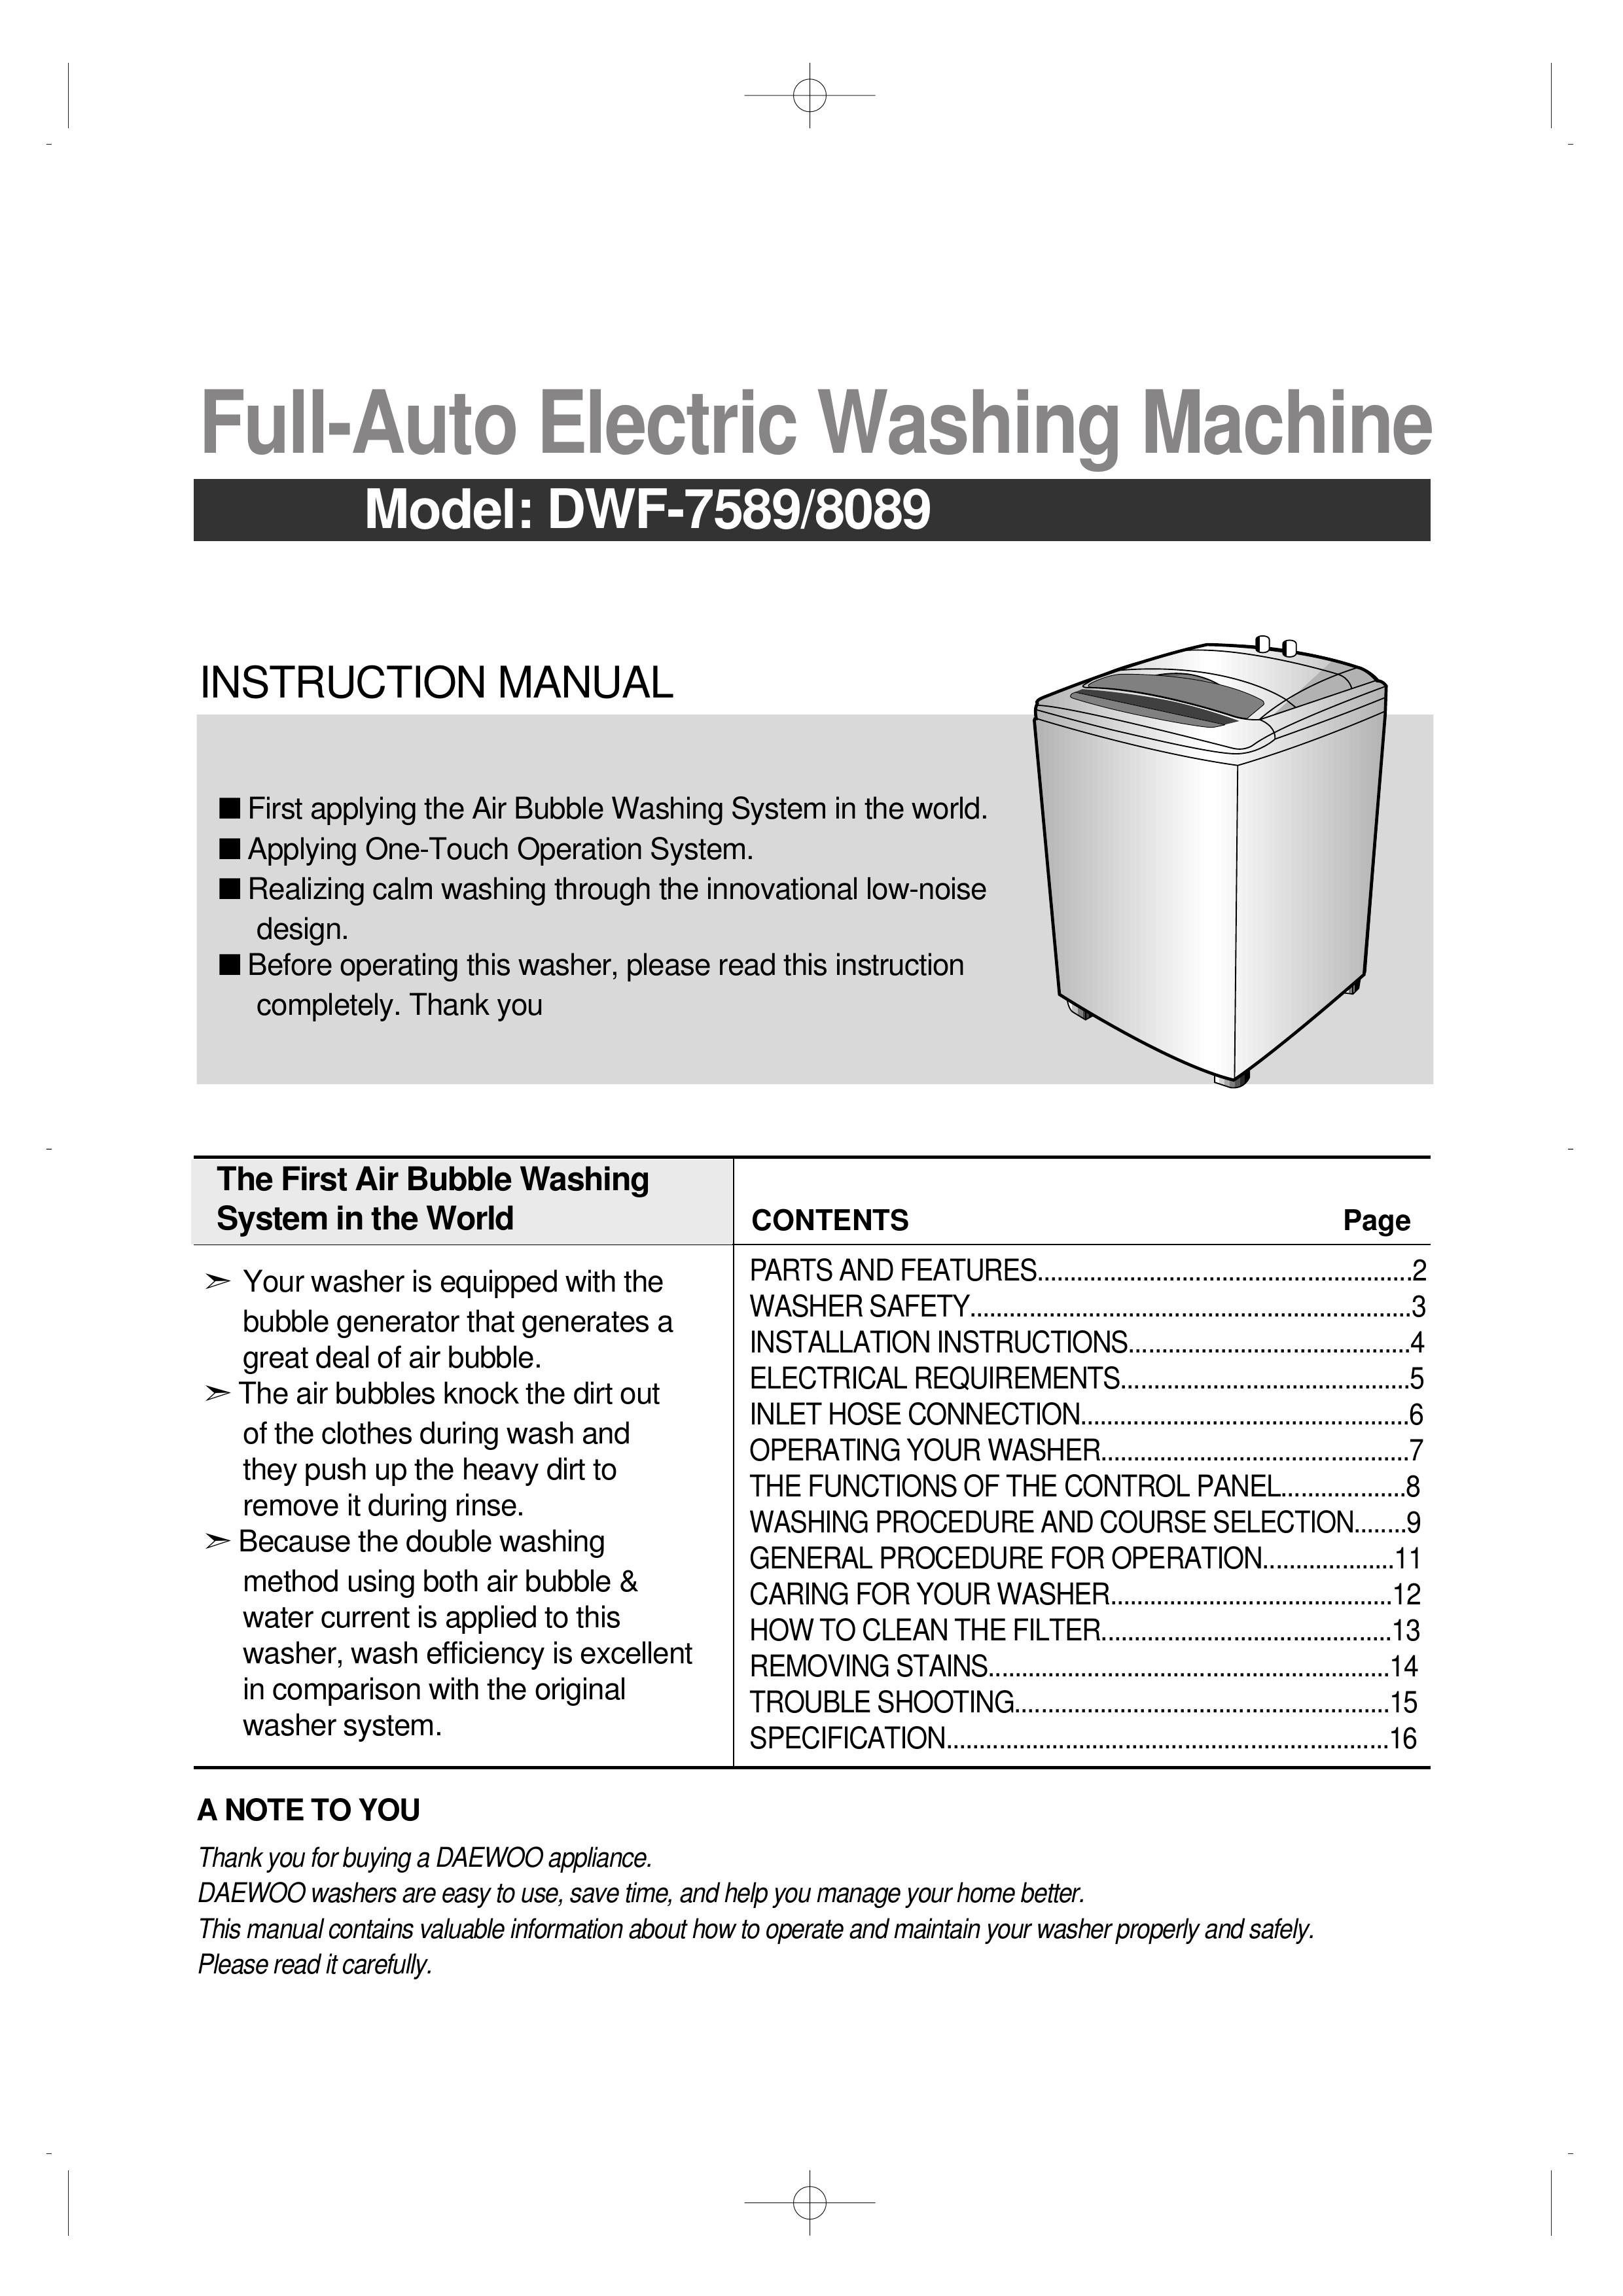 Husqvarna DWF-8089 Washer User Manual